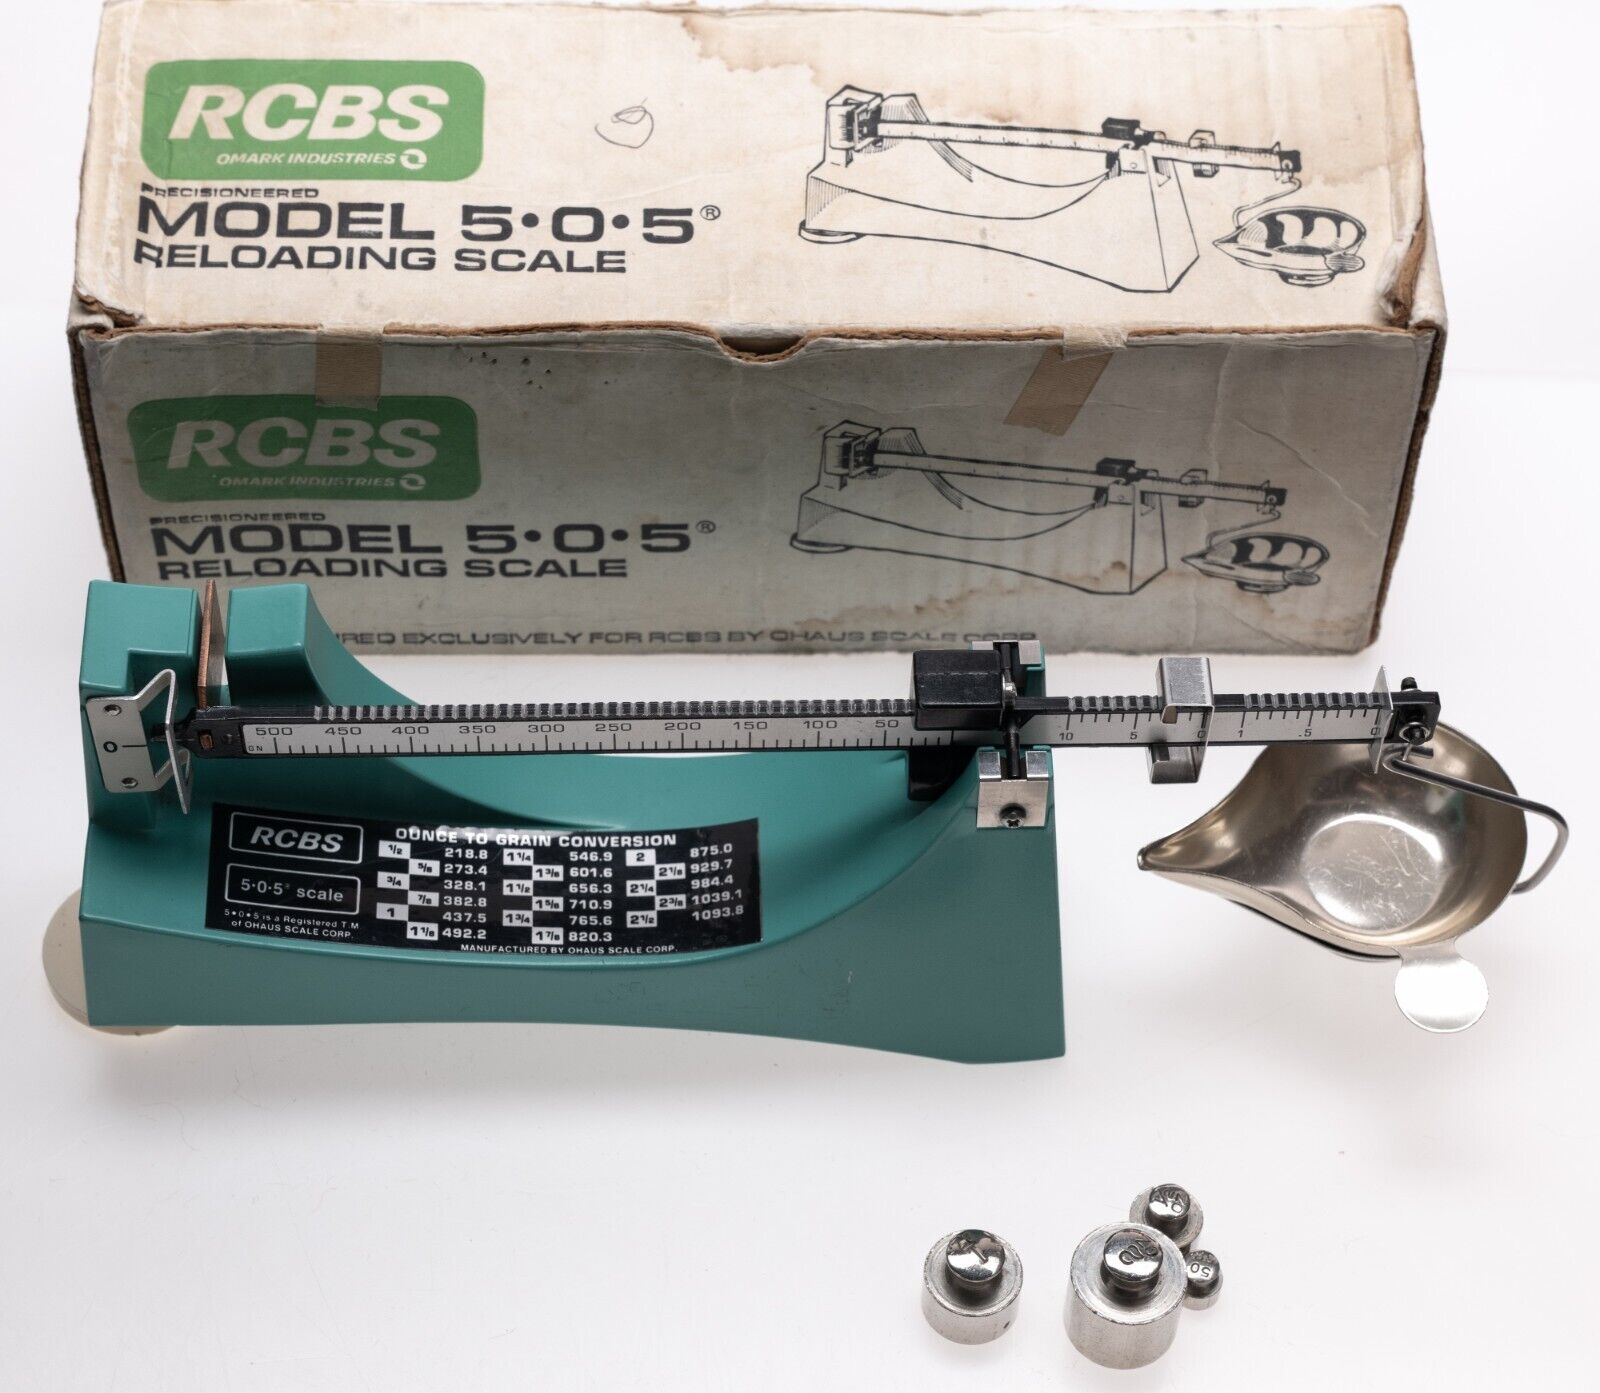 RCBS 505 Reloading Balance Beam Mechanical Powder Scale 09071 Original Box 5-0-5